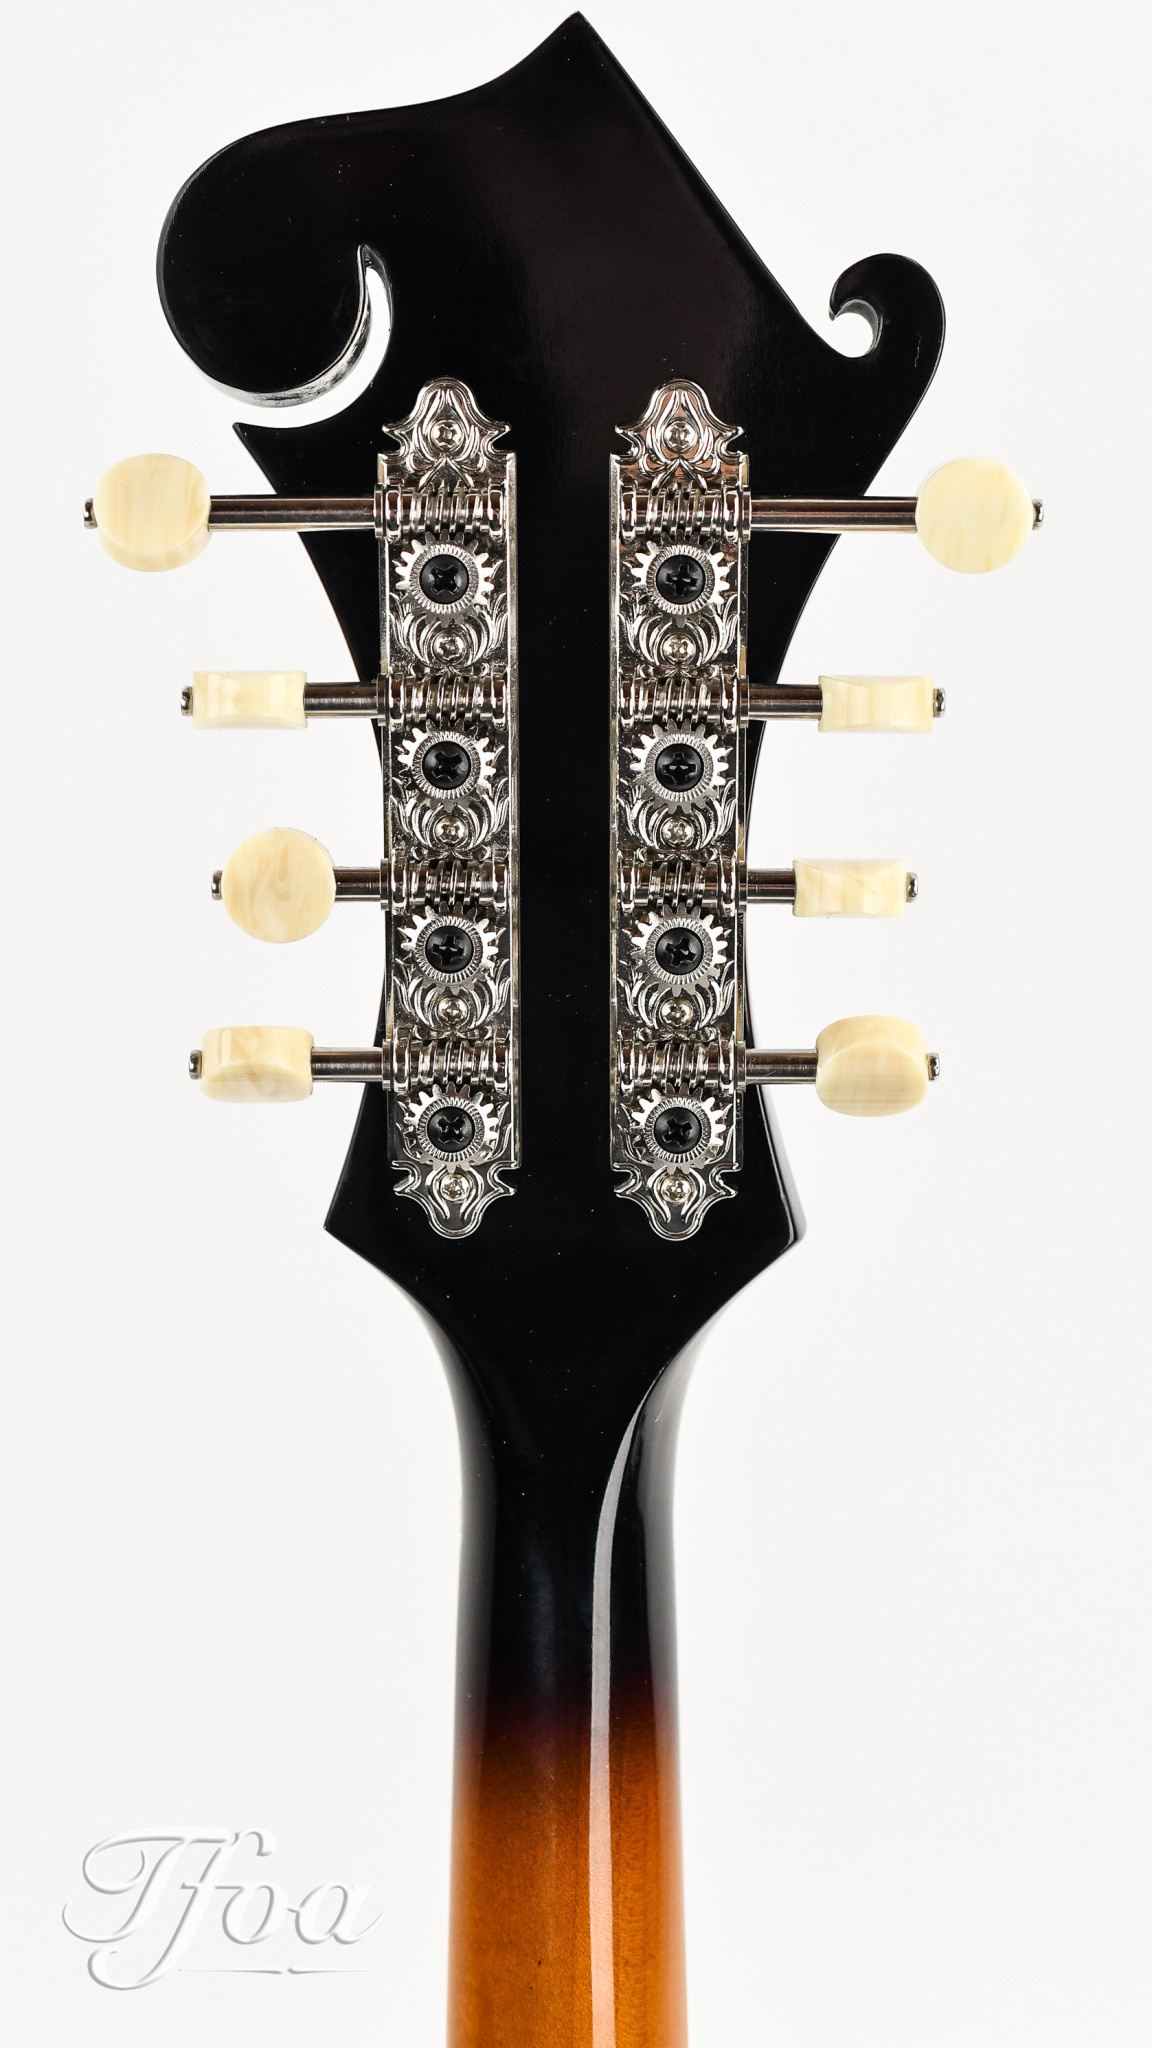 kentucky mandolin truss rod adjustment